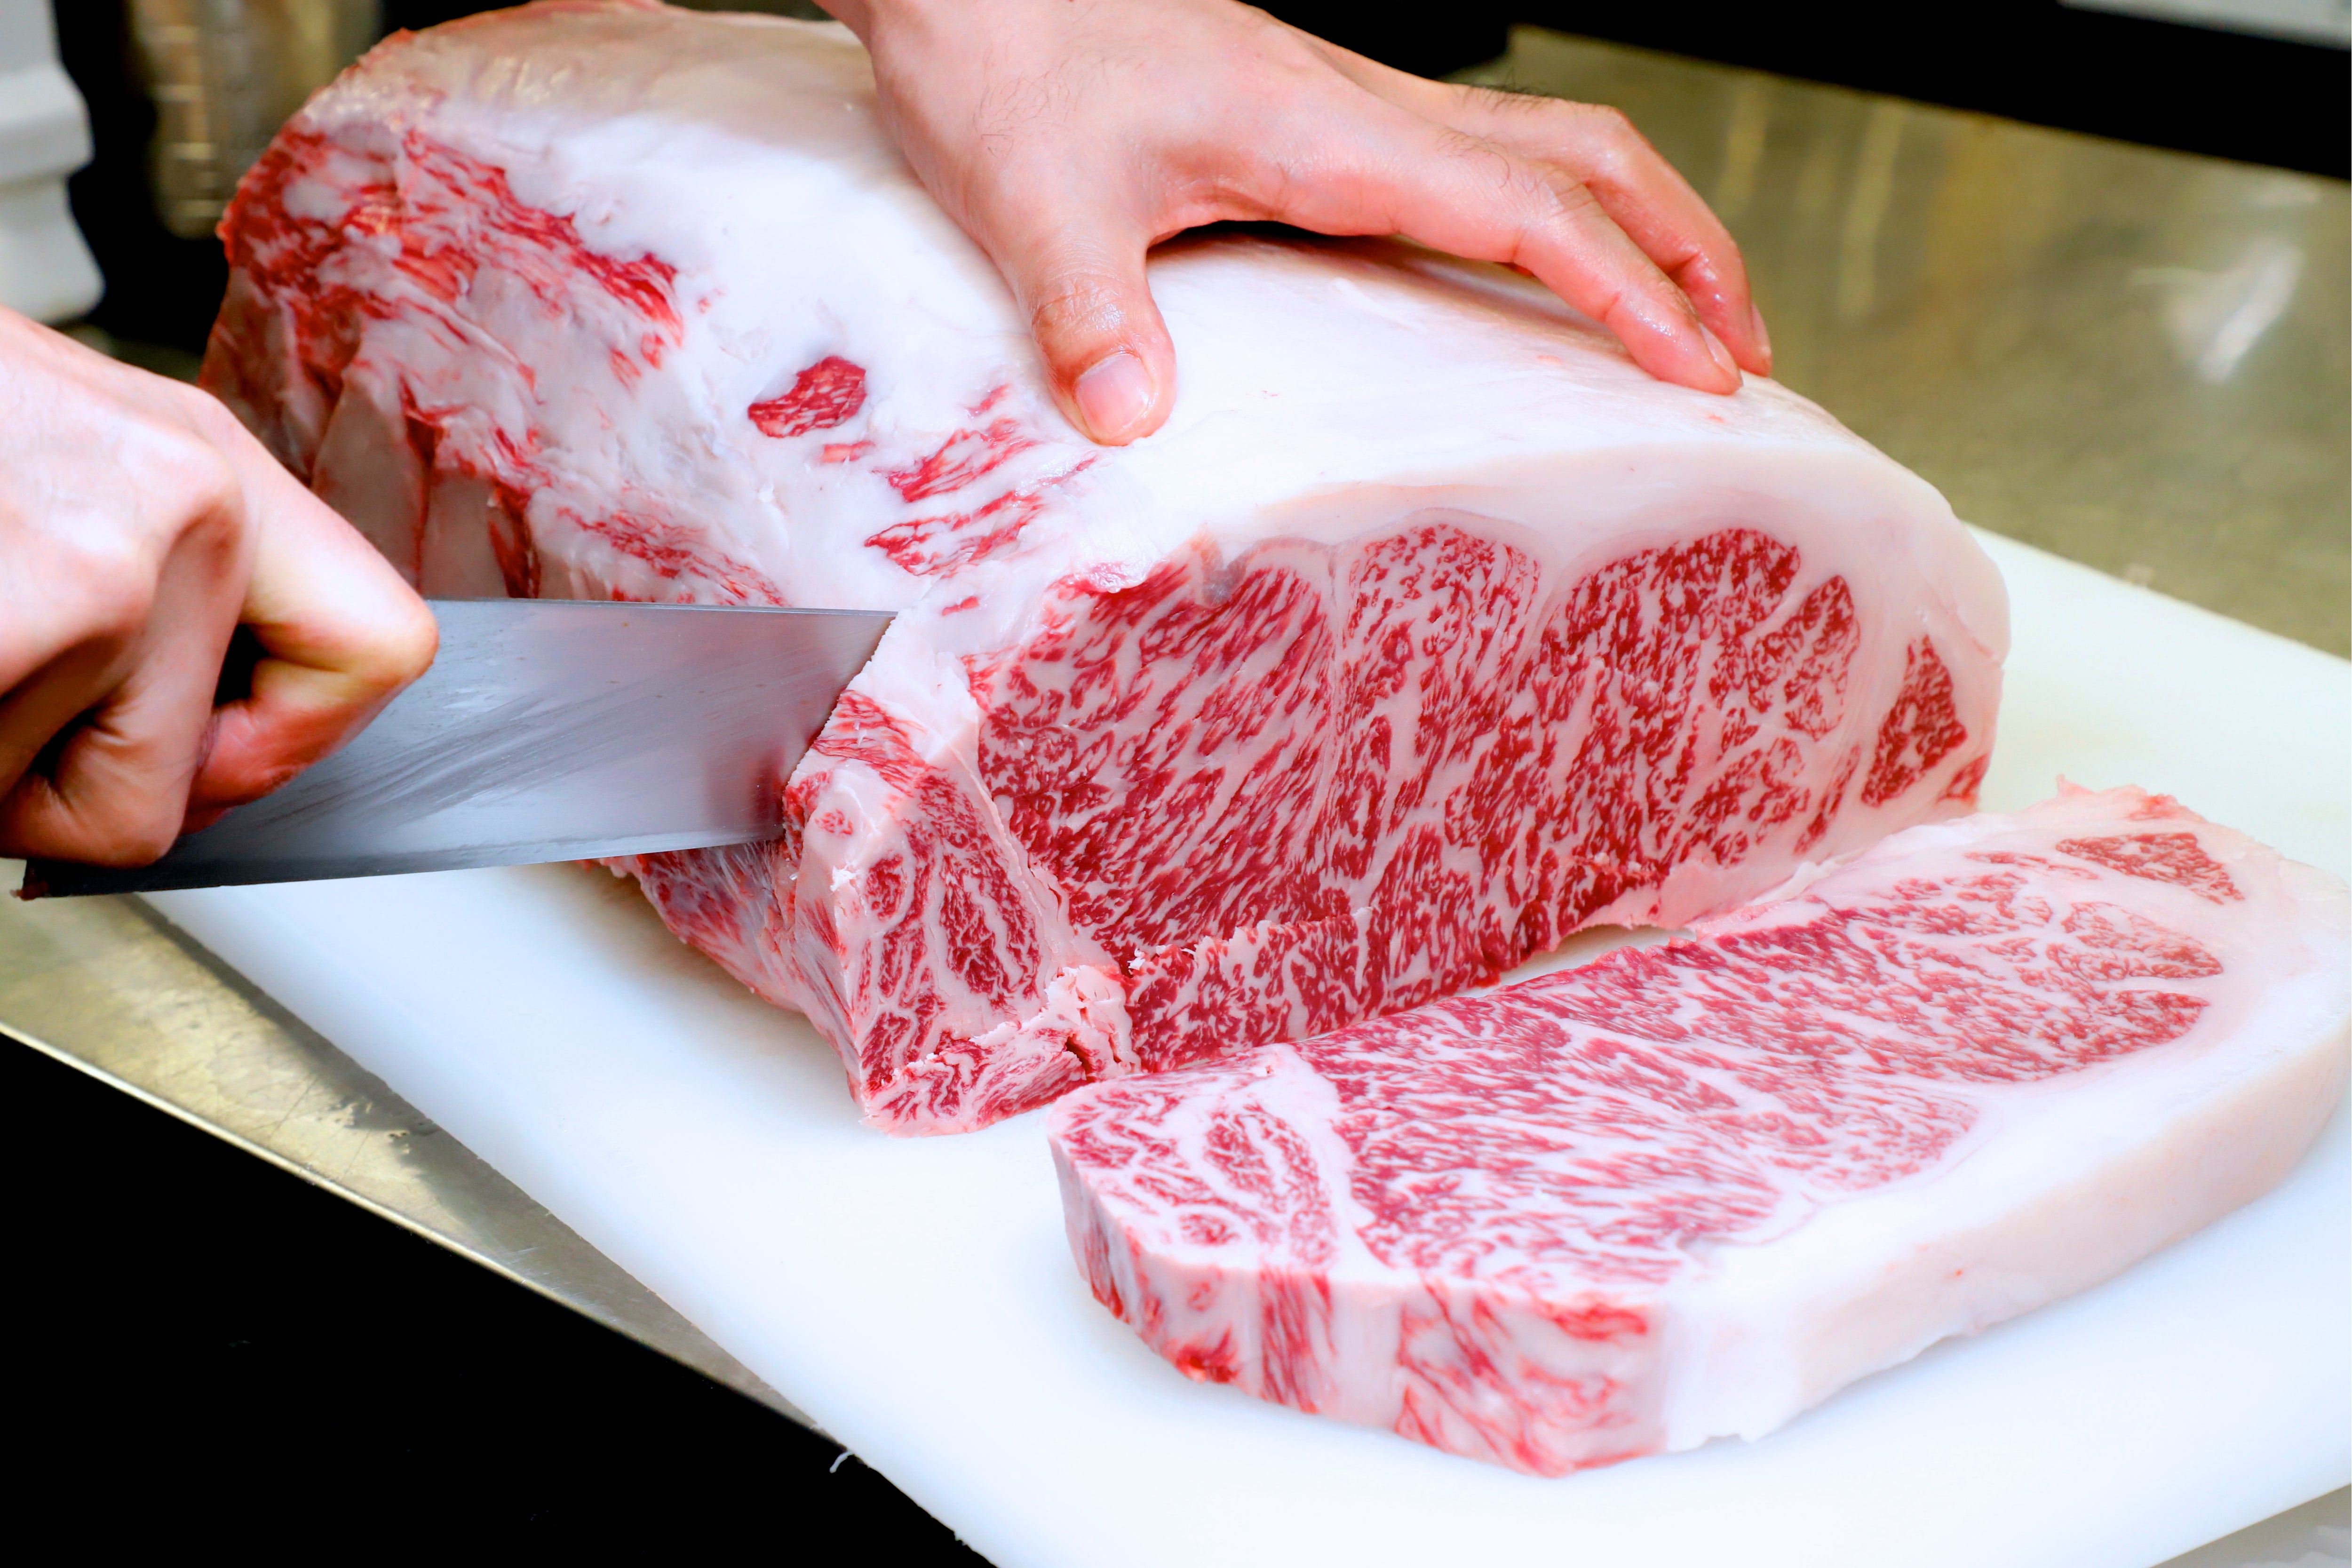 Japanese A5 Wagyu New York Strip – Mr. Steak